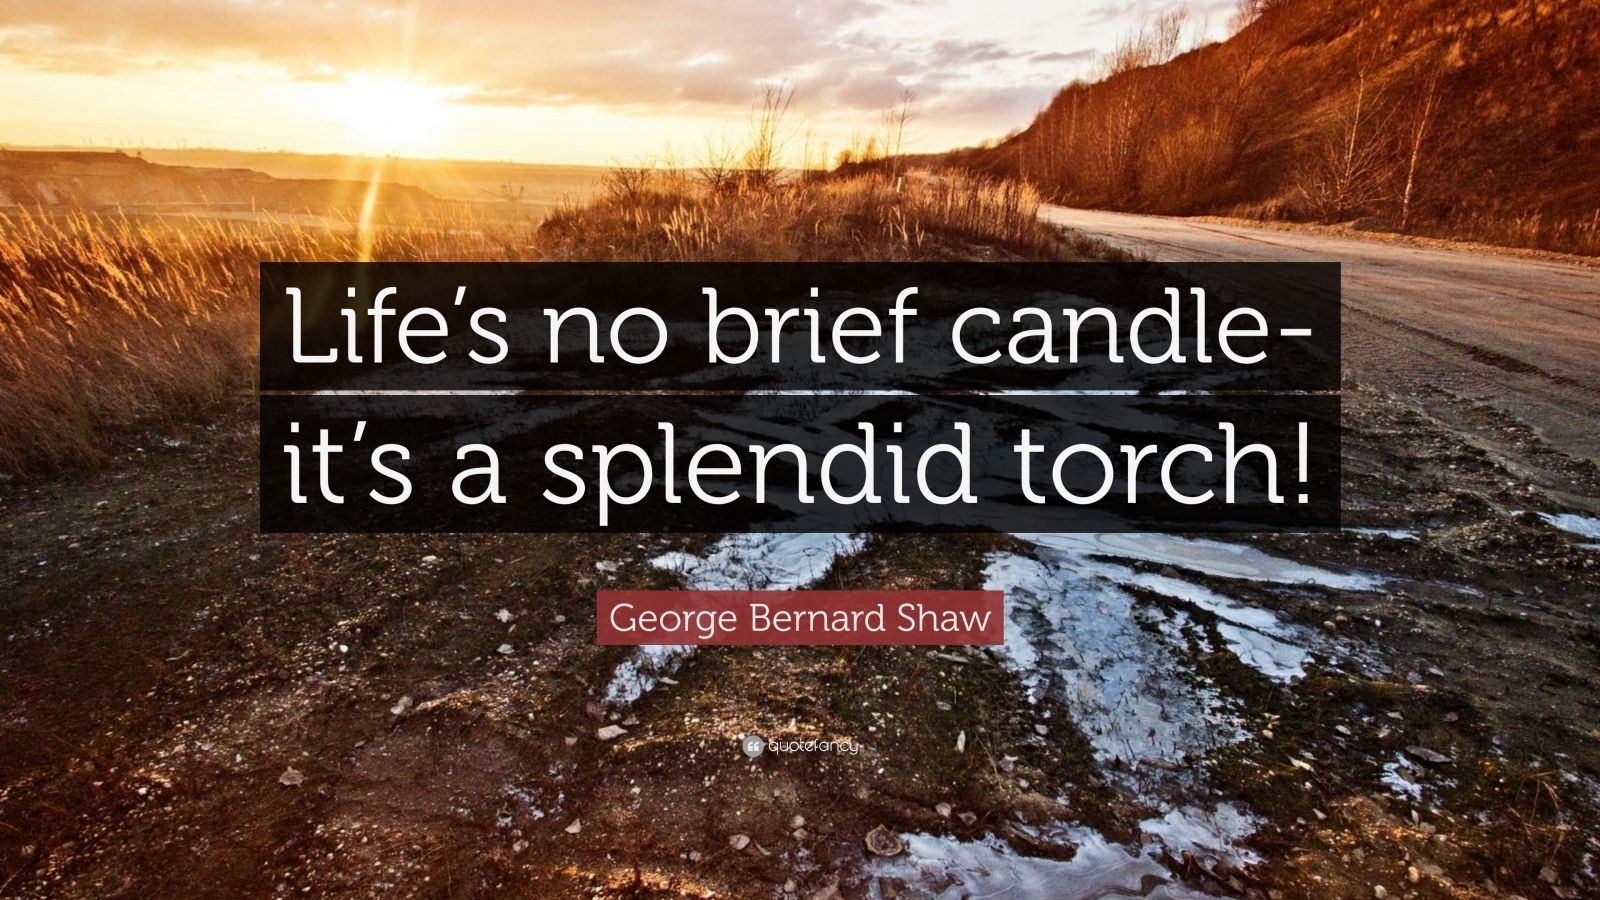 Bernard Shaw Quote “Life’s no brief candleit’s a splendid